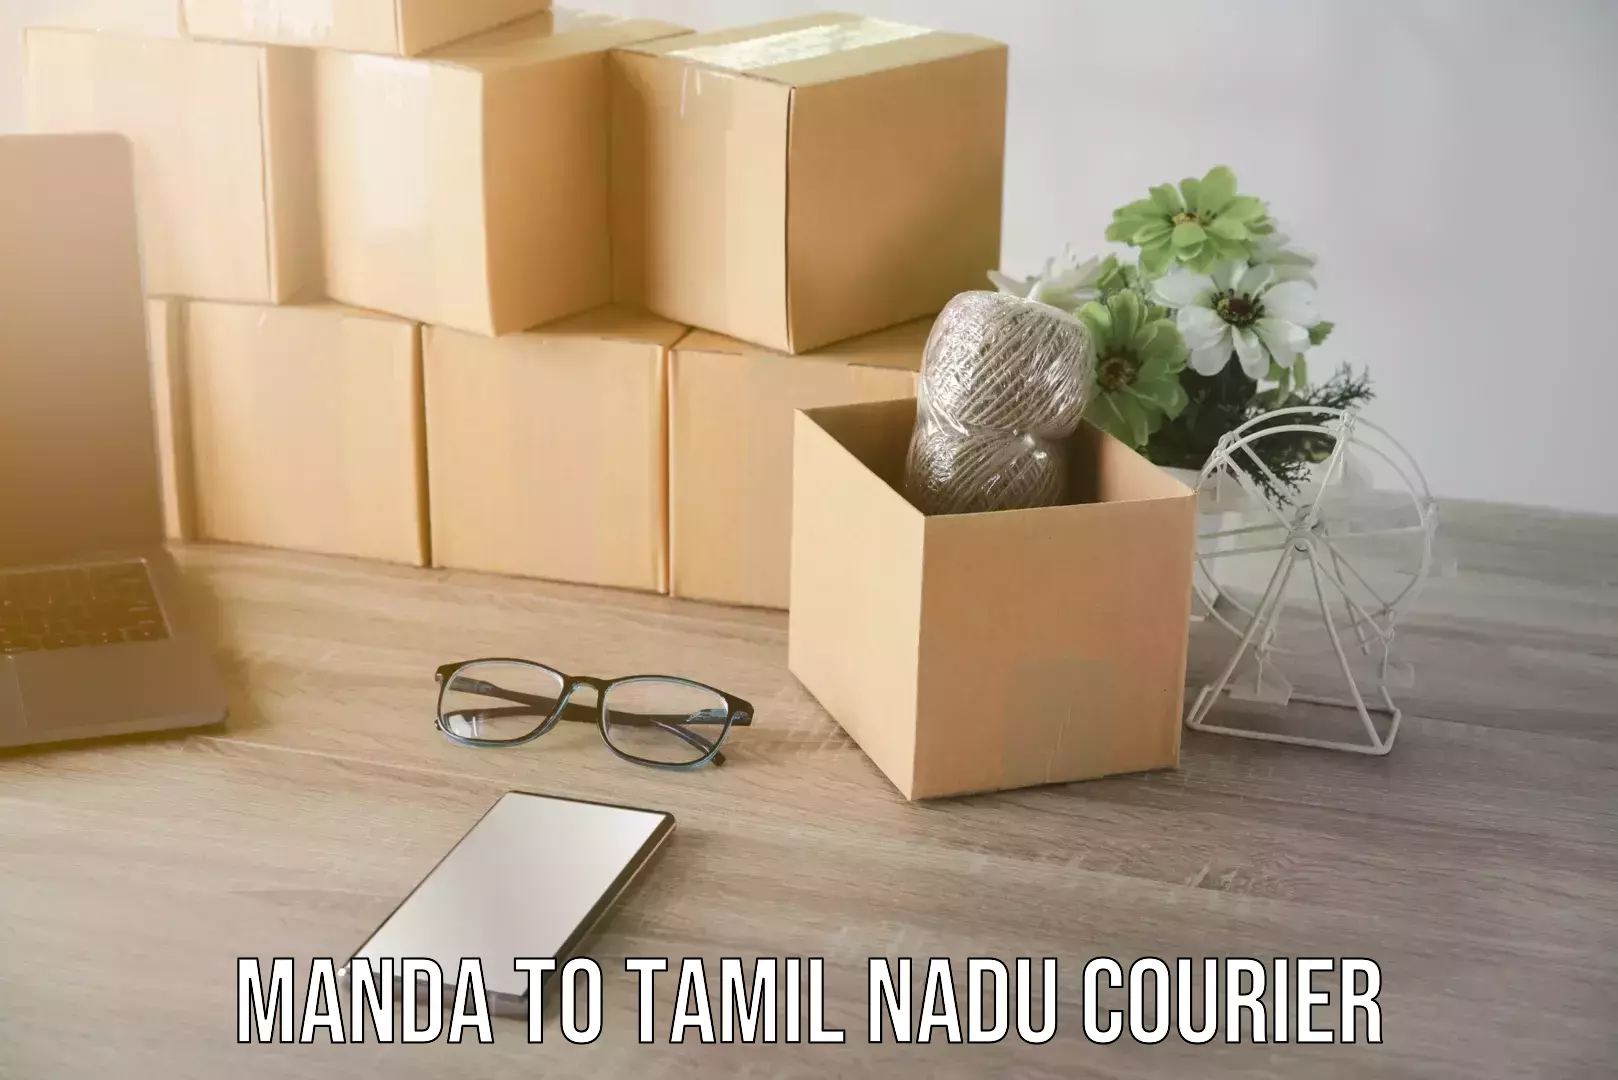 Home relocation experts Manda to Tamil Nadu